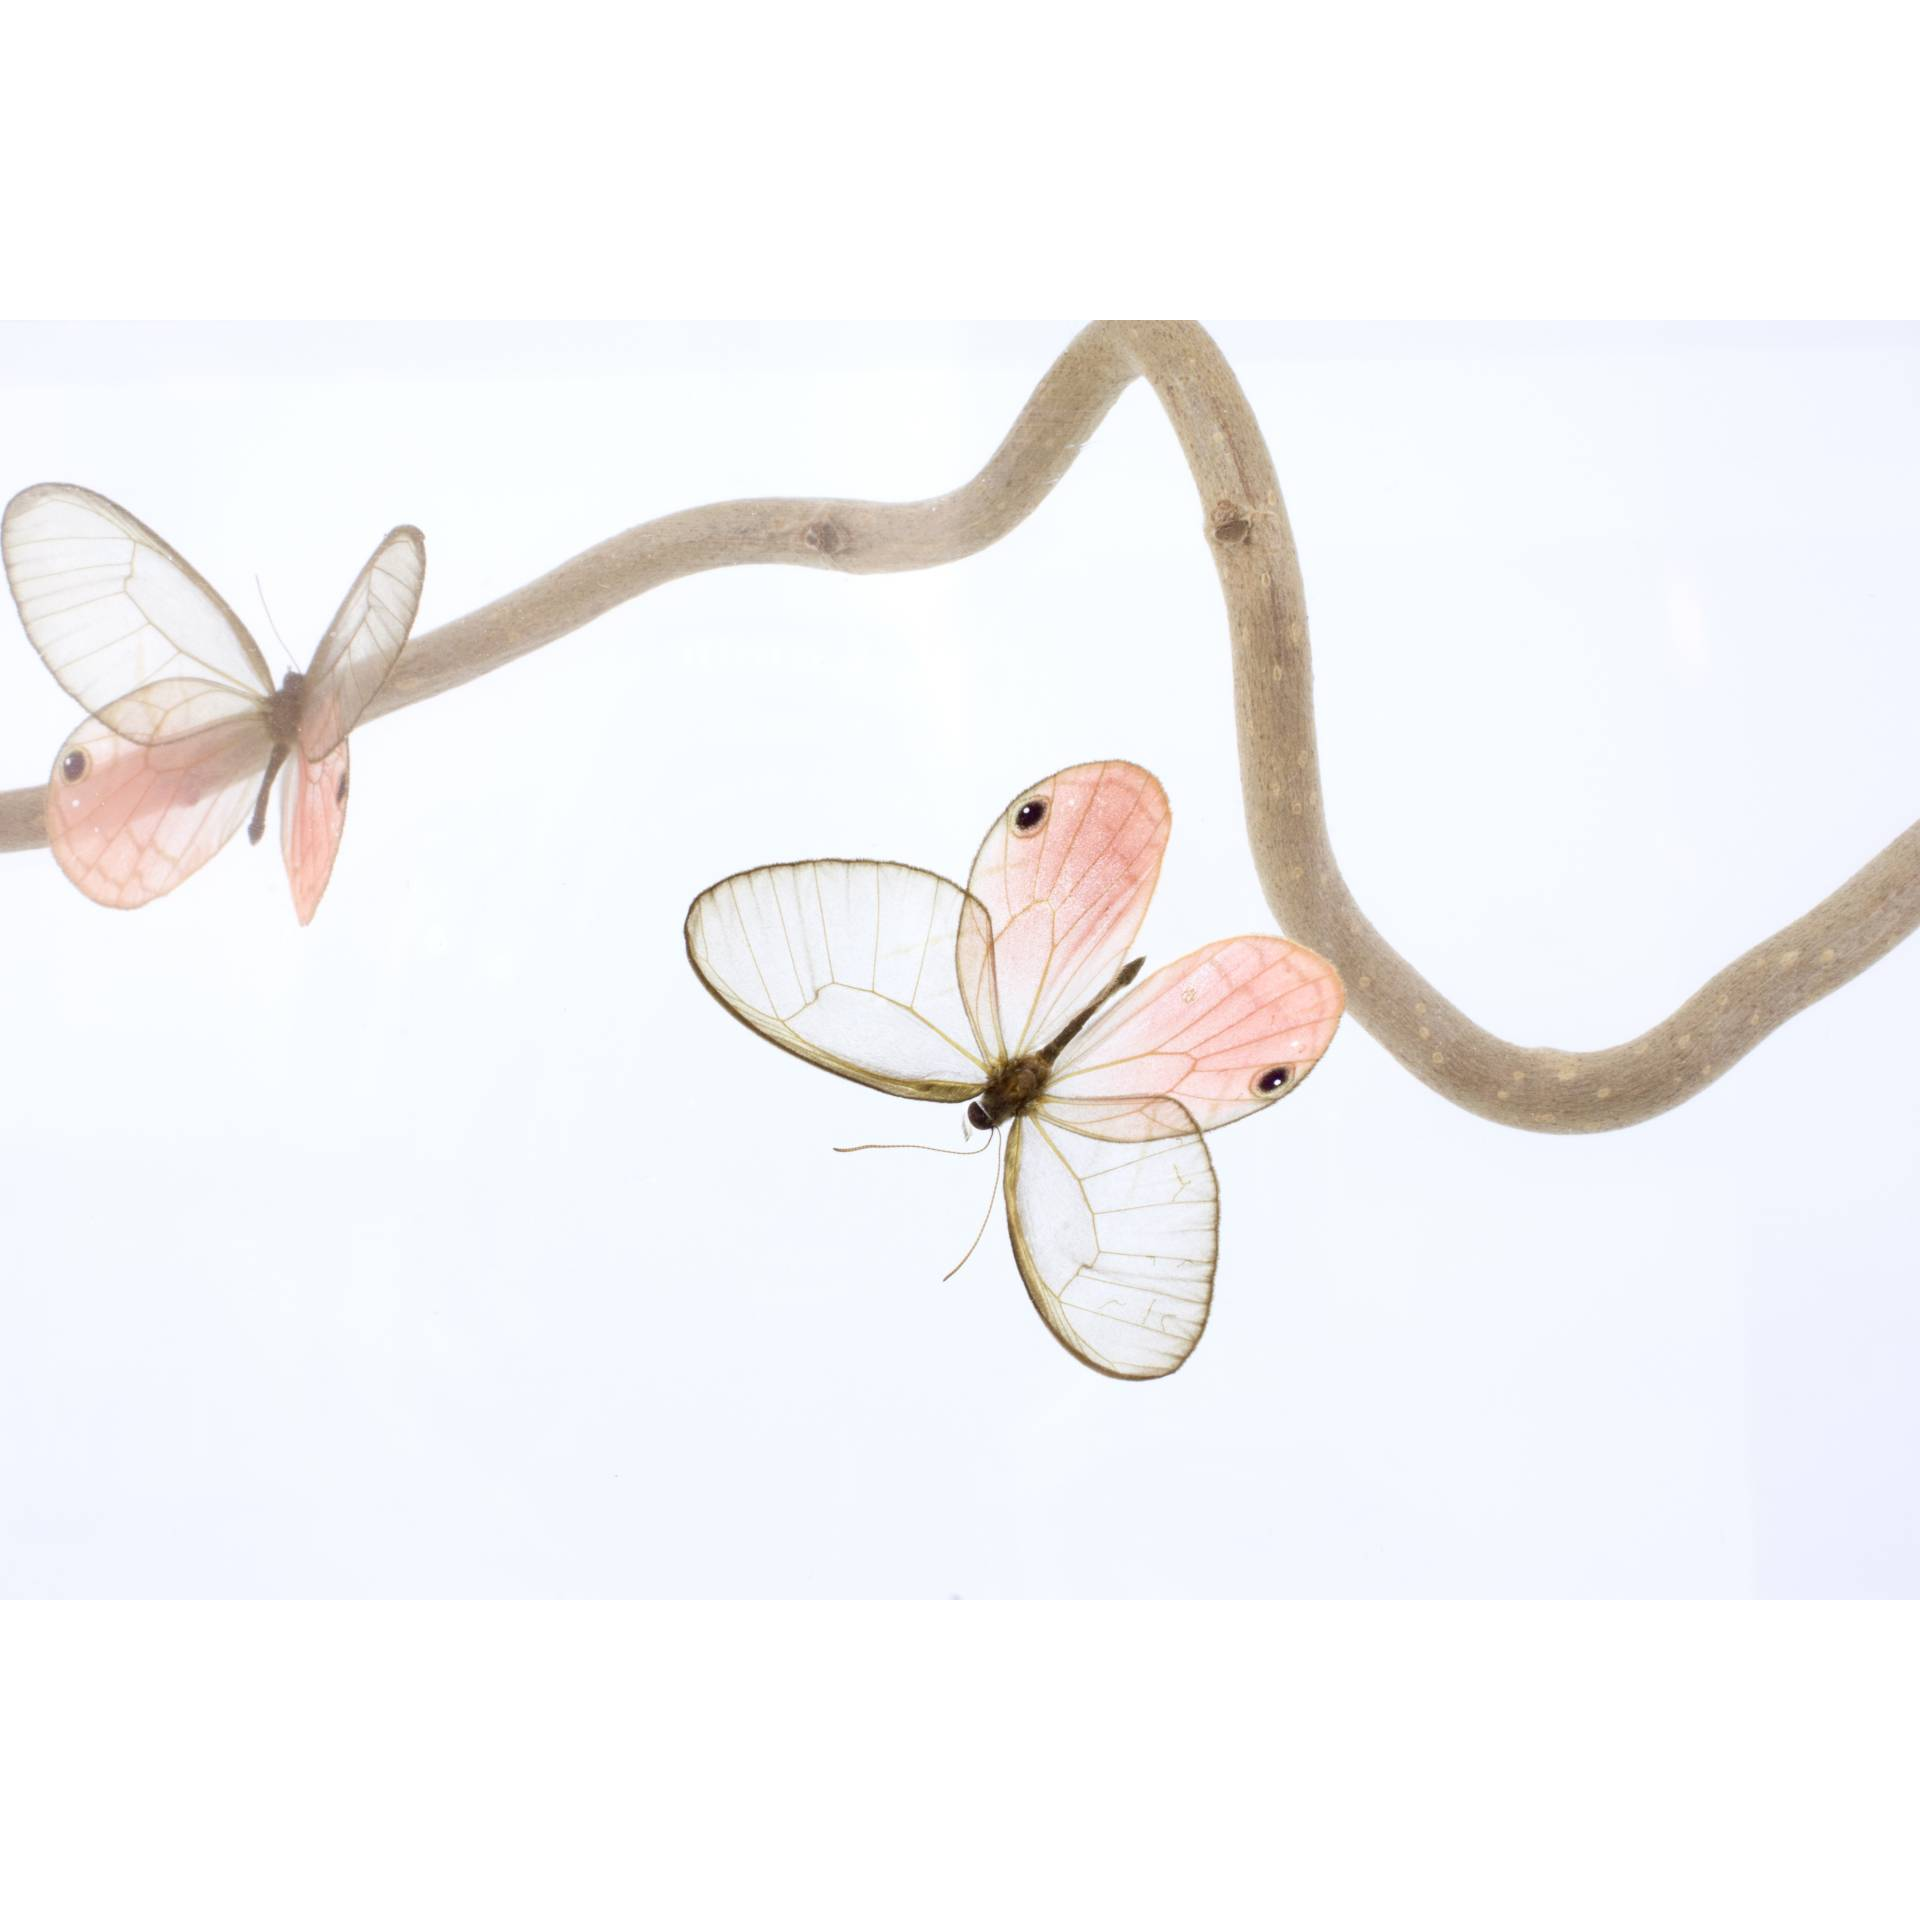 Jean-Luc MANIOULOUX, Sakura, Insectes naturalisés, papillons (Cymothoe Aurorina ), branche d'arbre, 19 X 61 X 14 cm